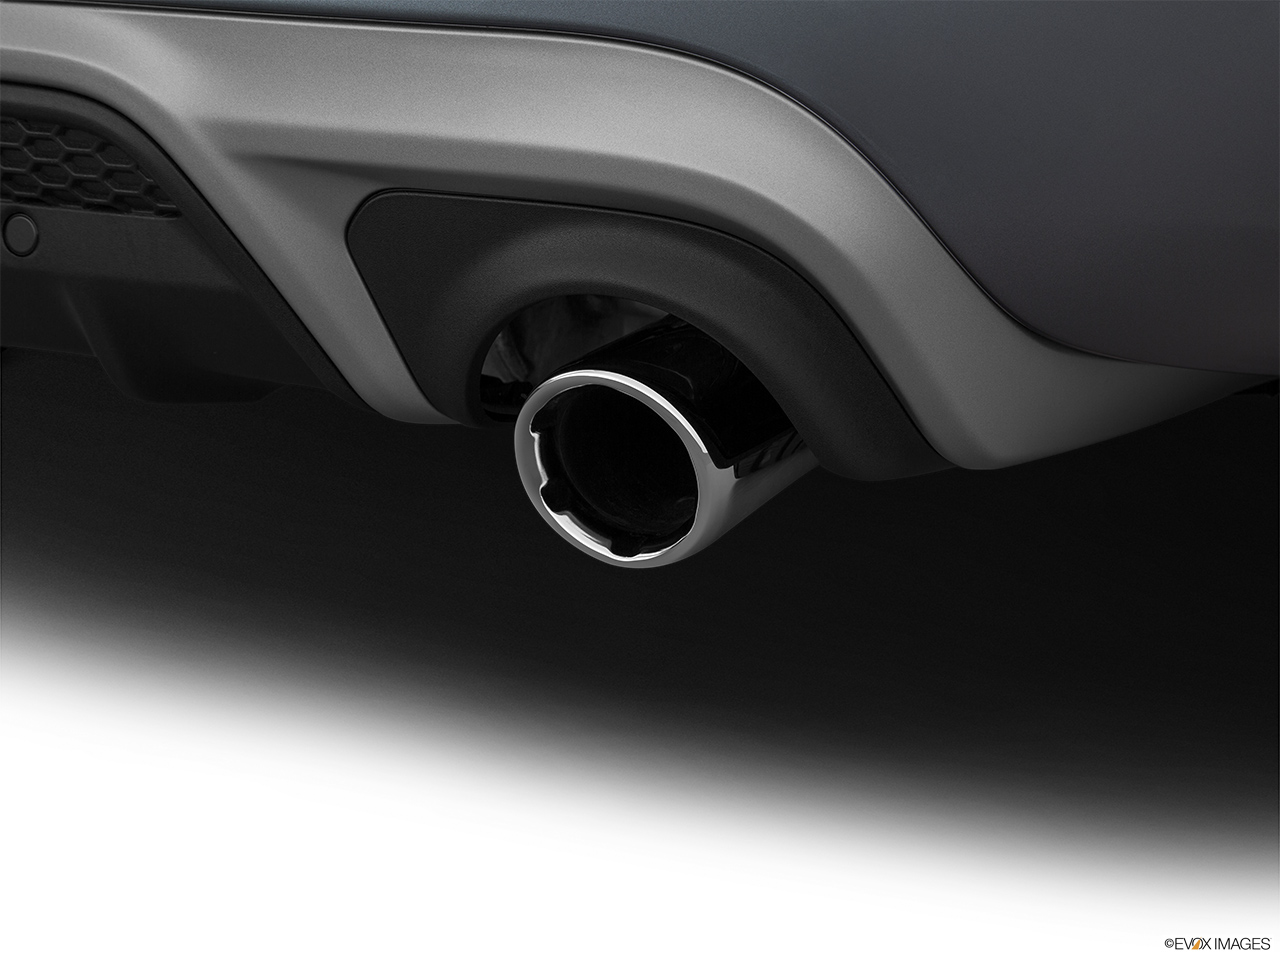 2018 Volvo V60 T5 Dynamic Chrome tip exhaust pipe. 